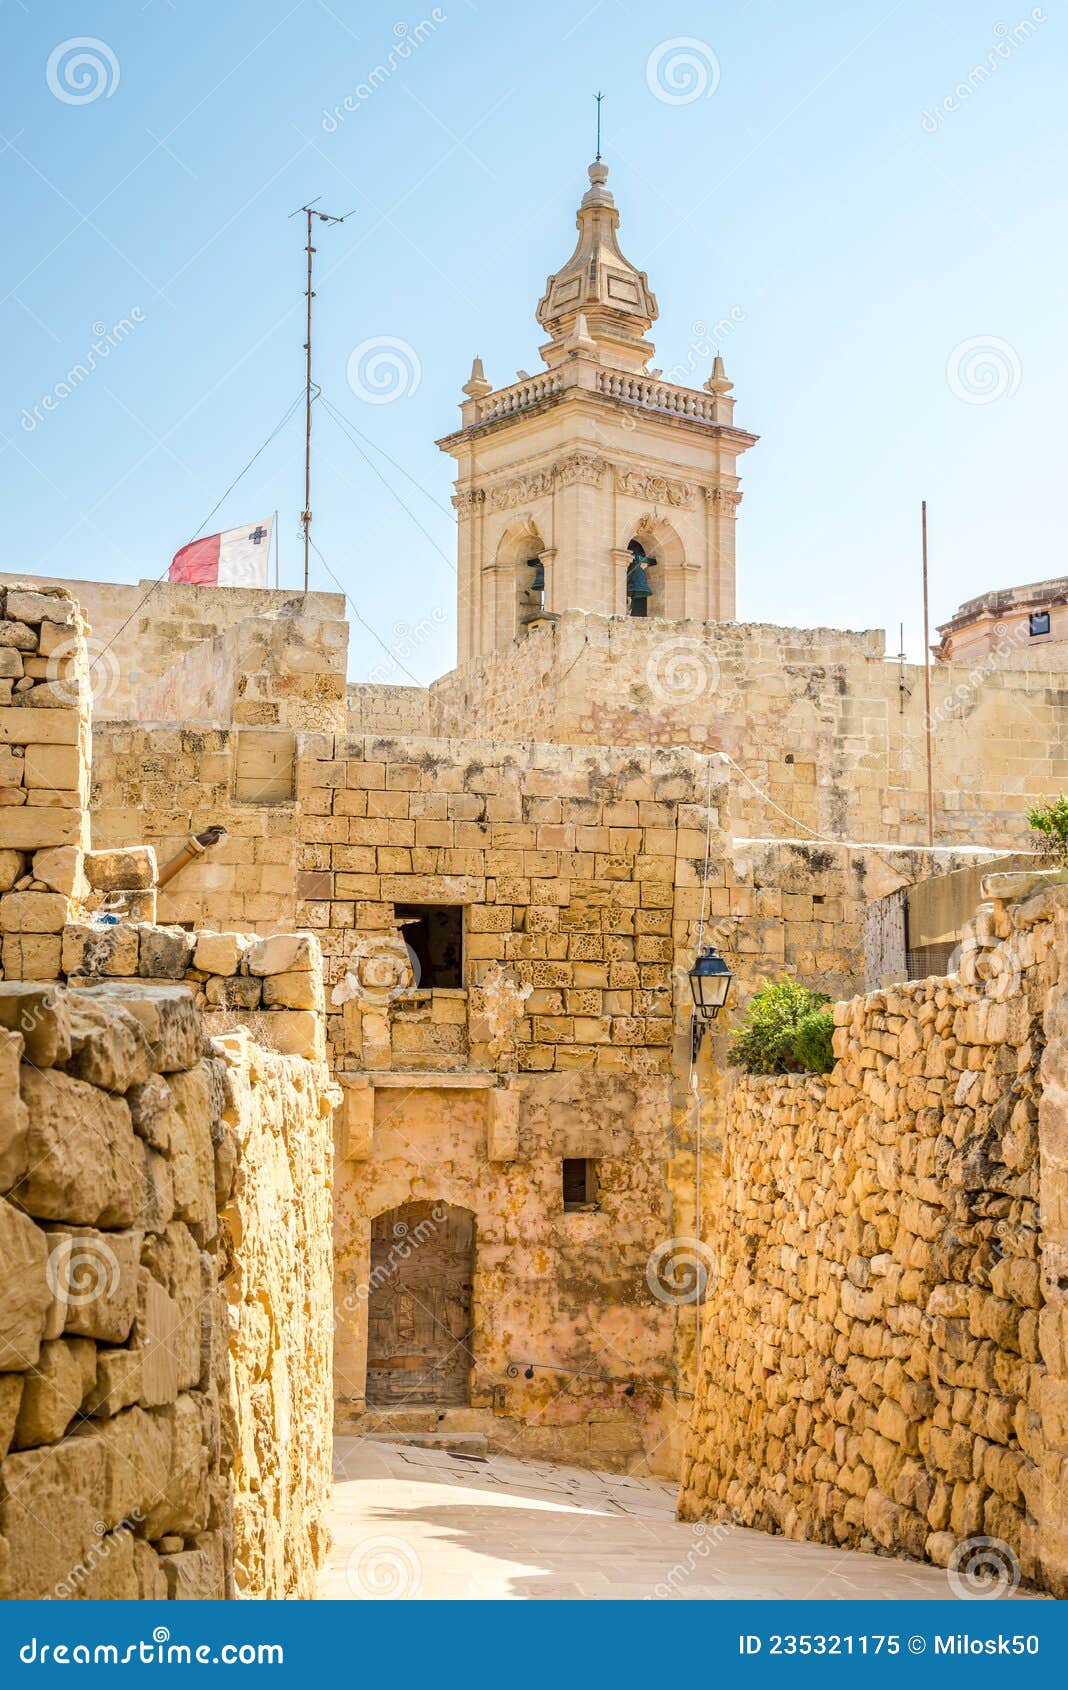 in the streets of old cittadella in victoria town -gozo, malta